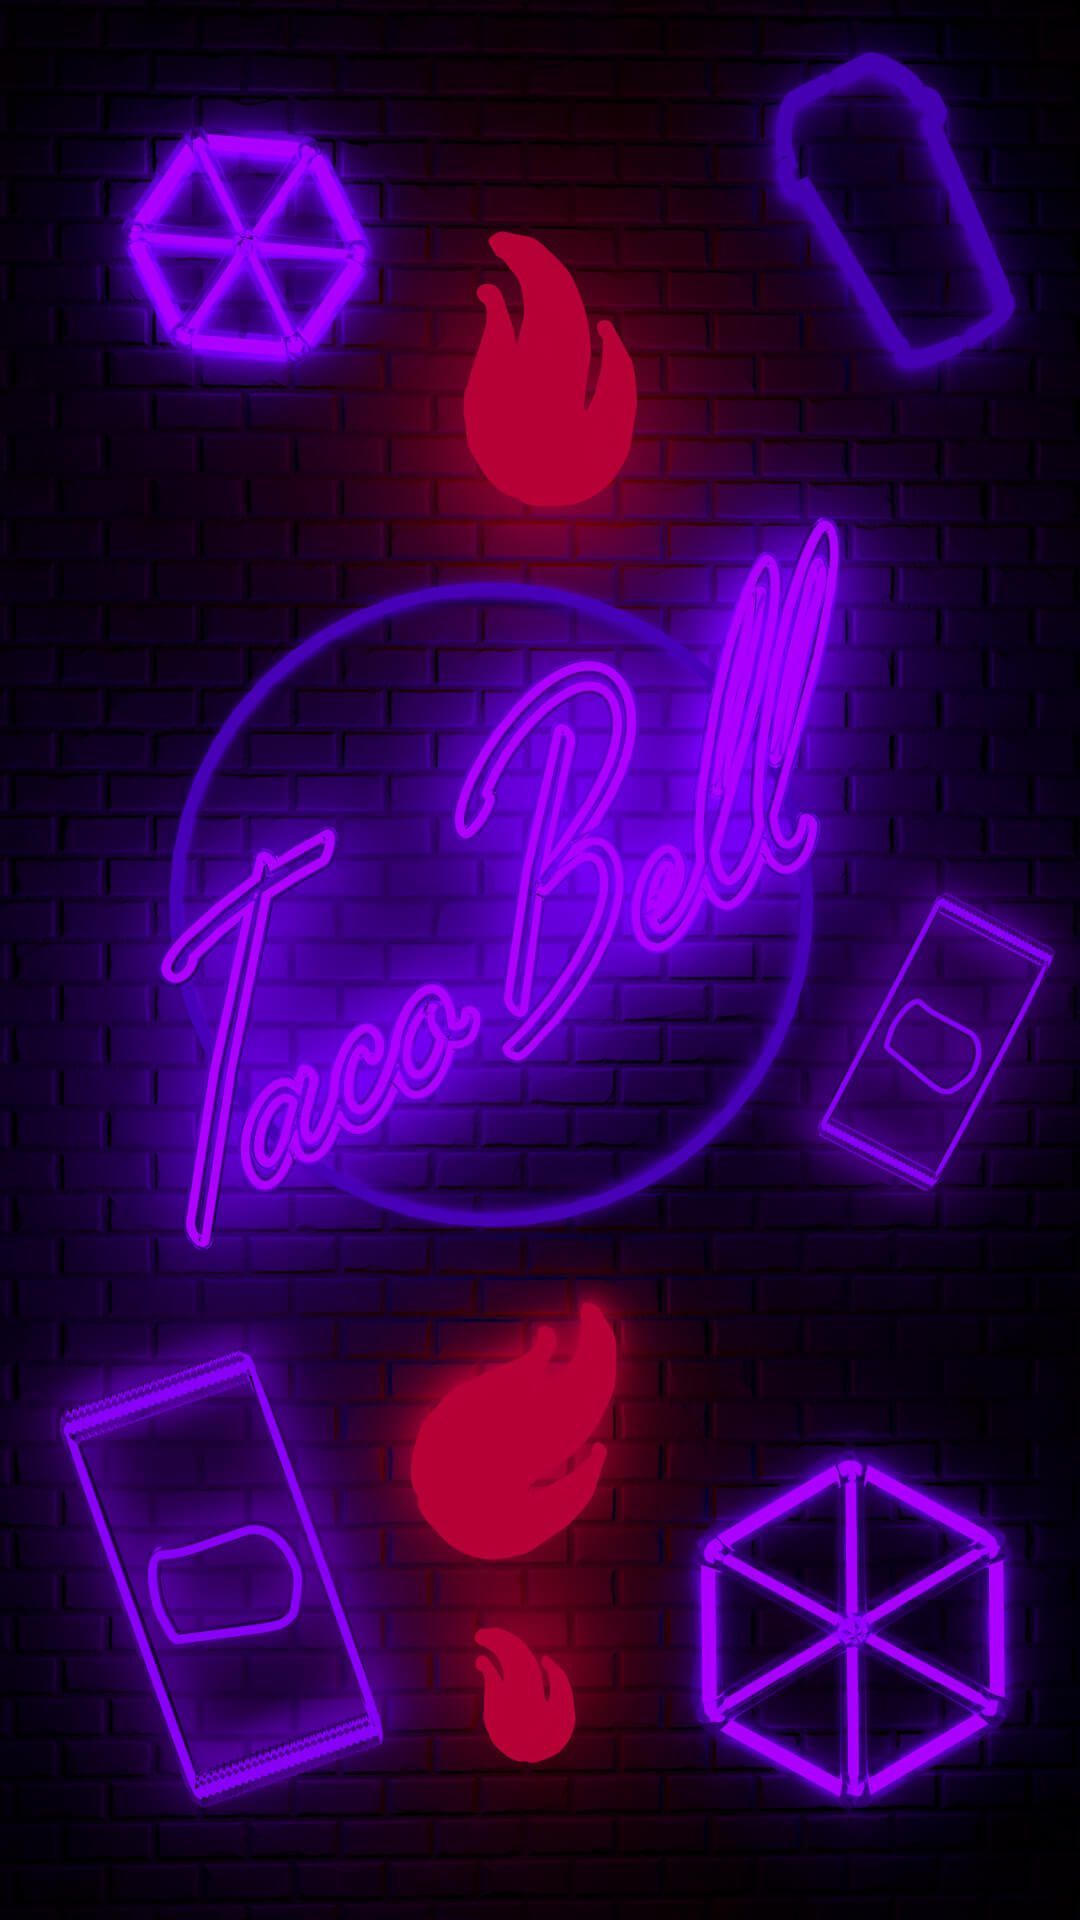 Taco Bell Wallpaper. Wallpaper, Neon signs, Phone wallpaper